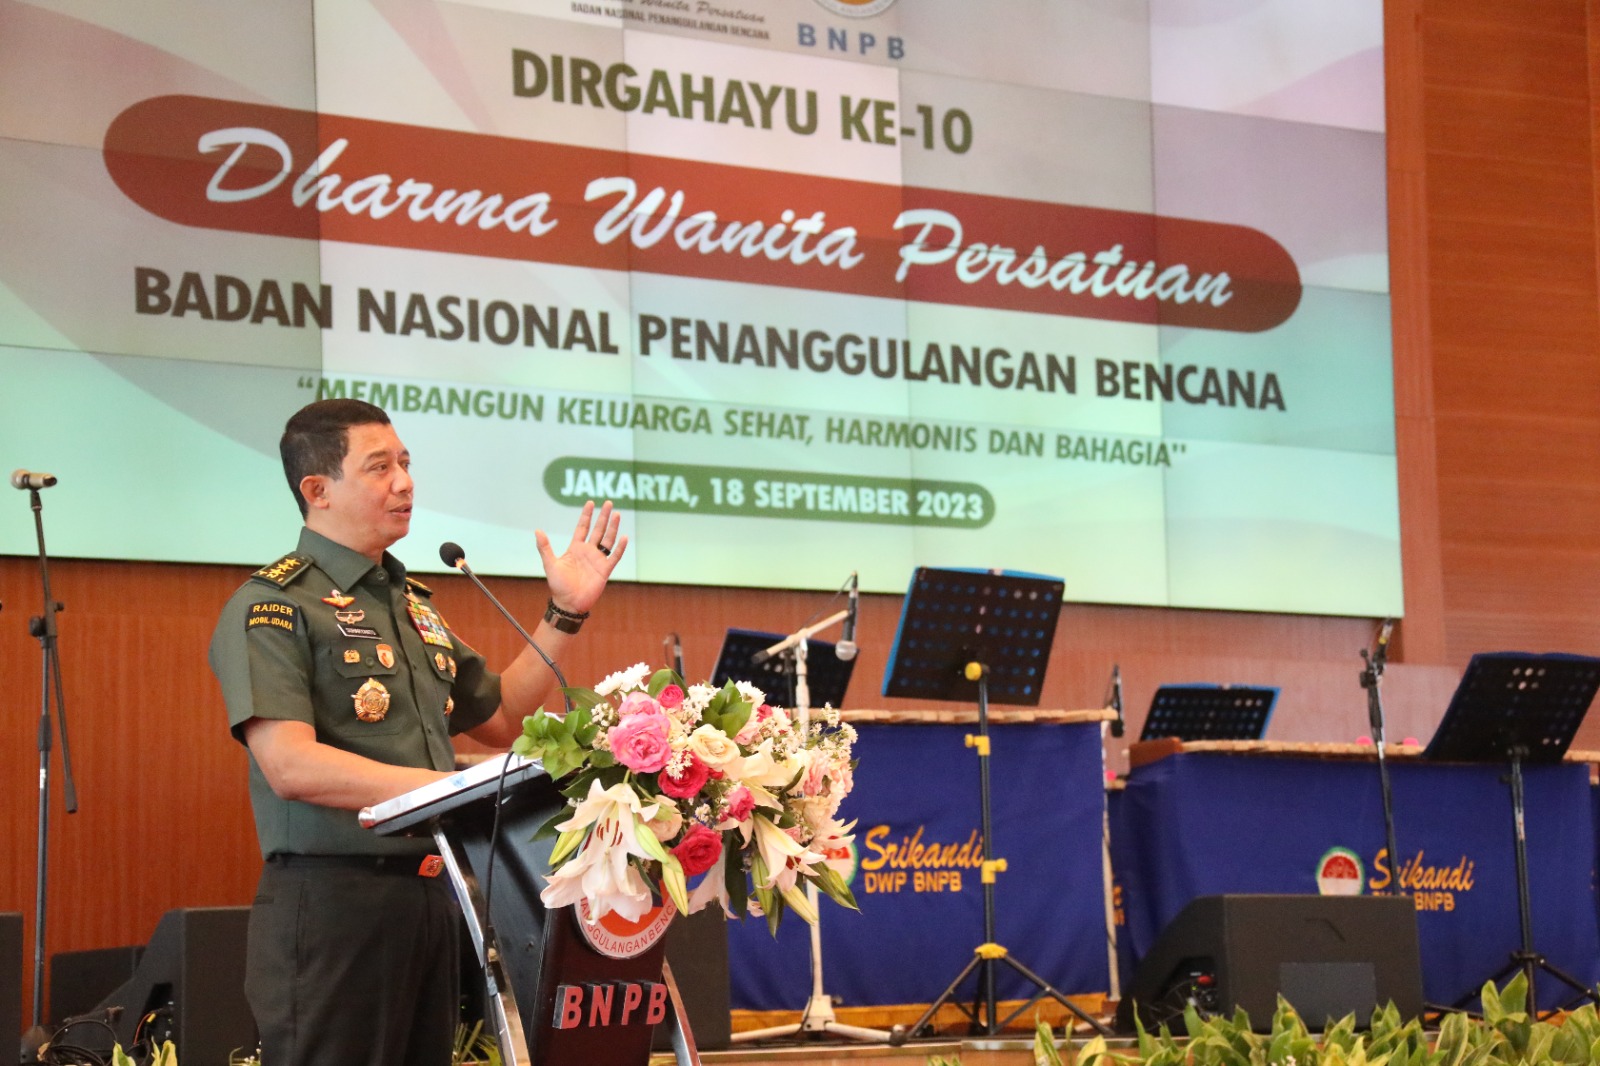 Kepala BNPB Letjen TNI Suharyanto selaku Penasehat Dharma Wanita Persatuan (DWP) BNPB saat memberikan arahan pada Hari Ulang Tahun DWP BNPB ke 10 di Aula Sutopo Purwo Nugroho, Graha BNPB, Jakarta pada Senin (18/9).